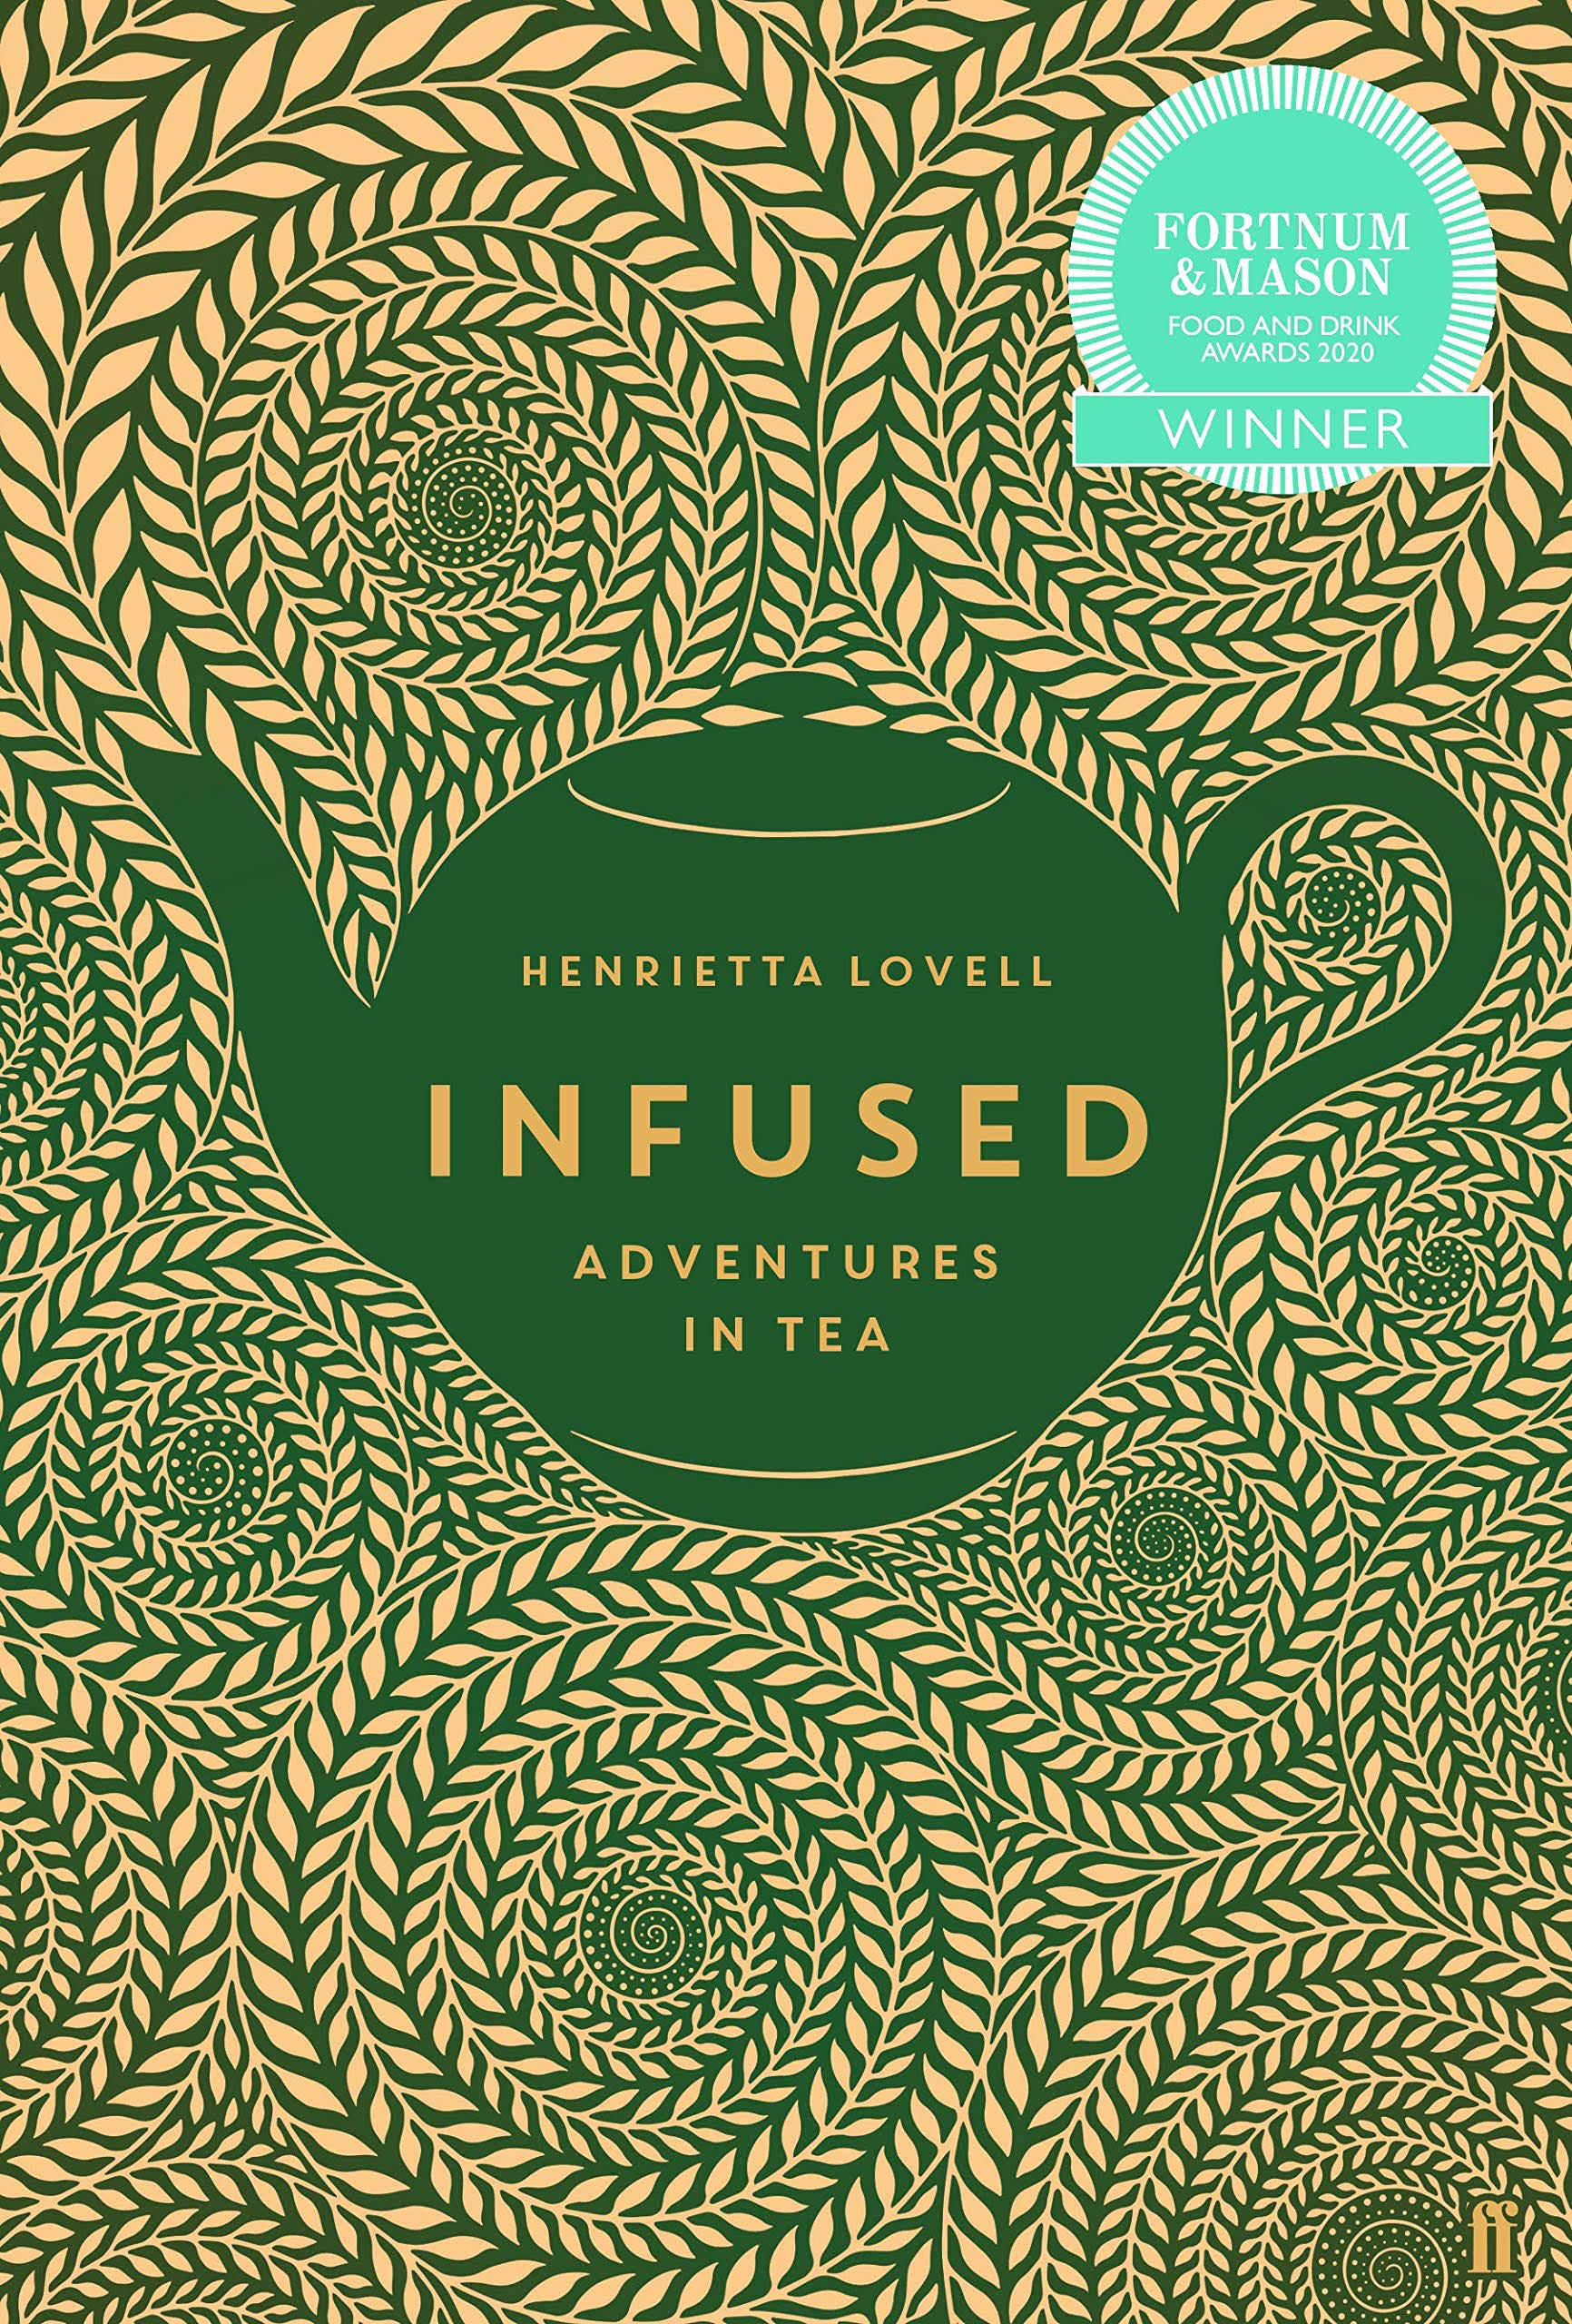 Infused: Adventures in Tea [Book]